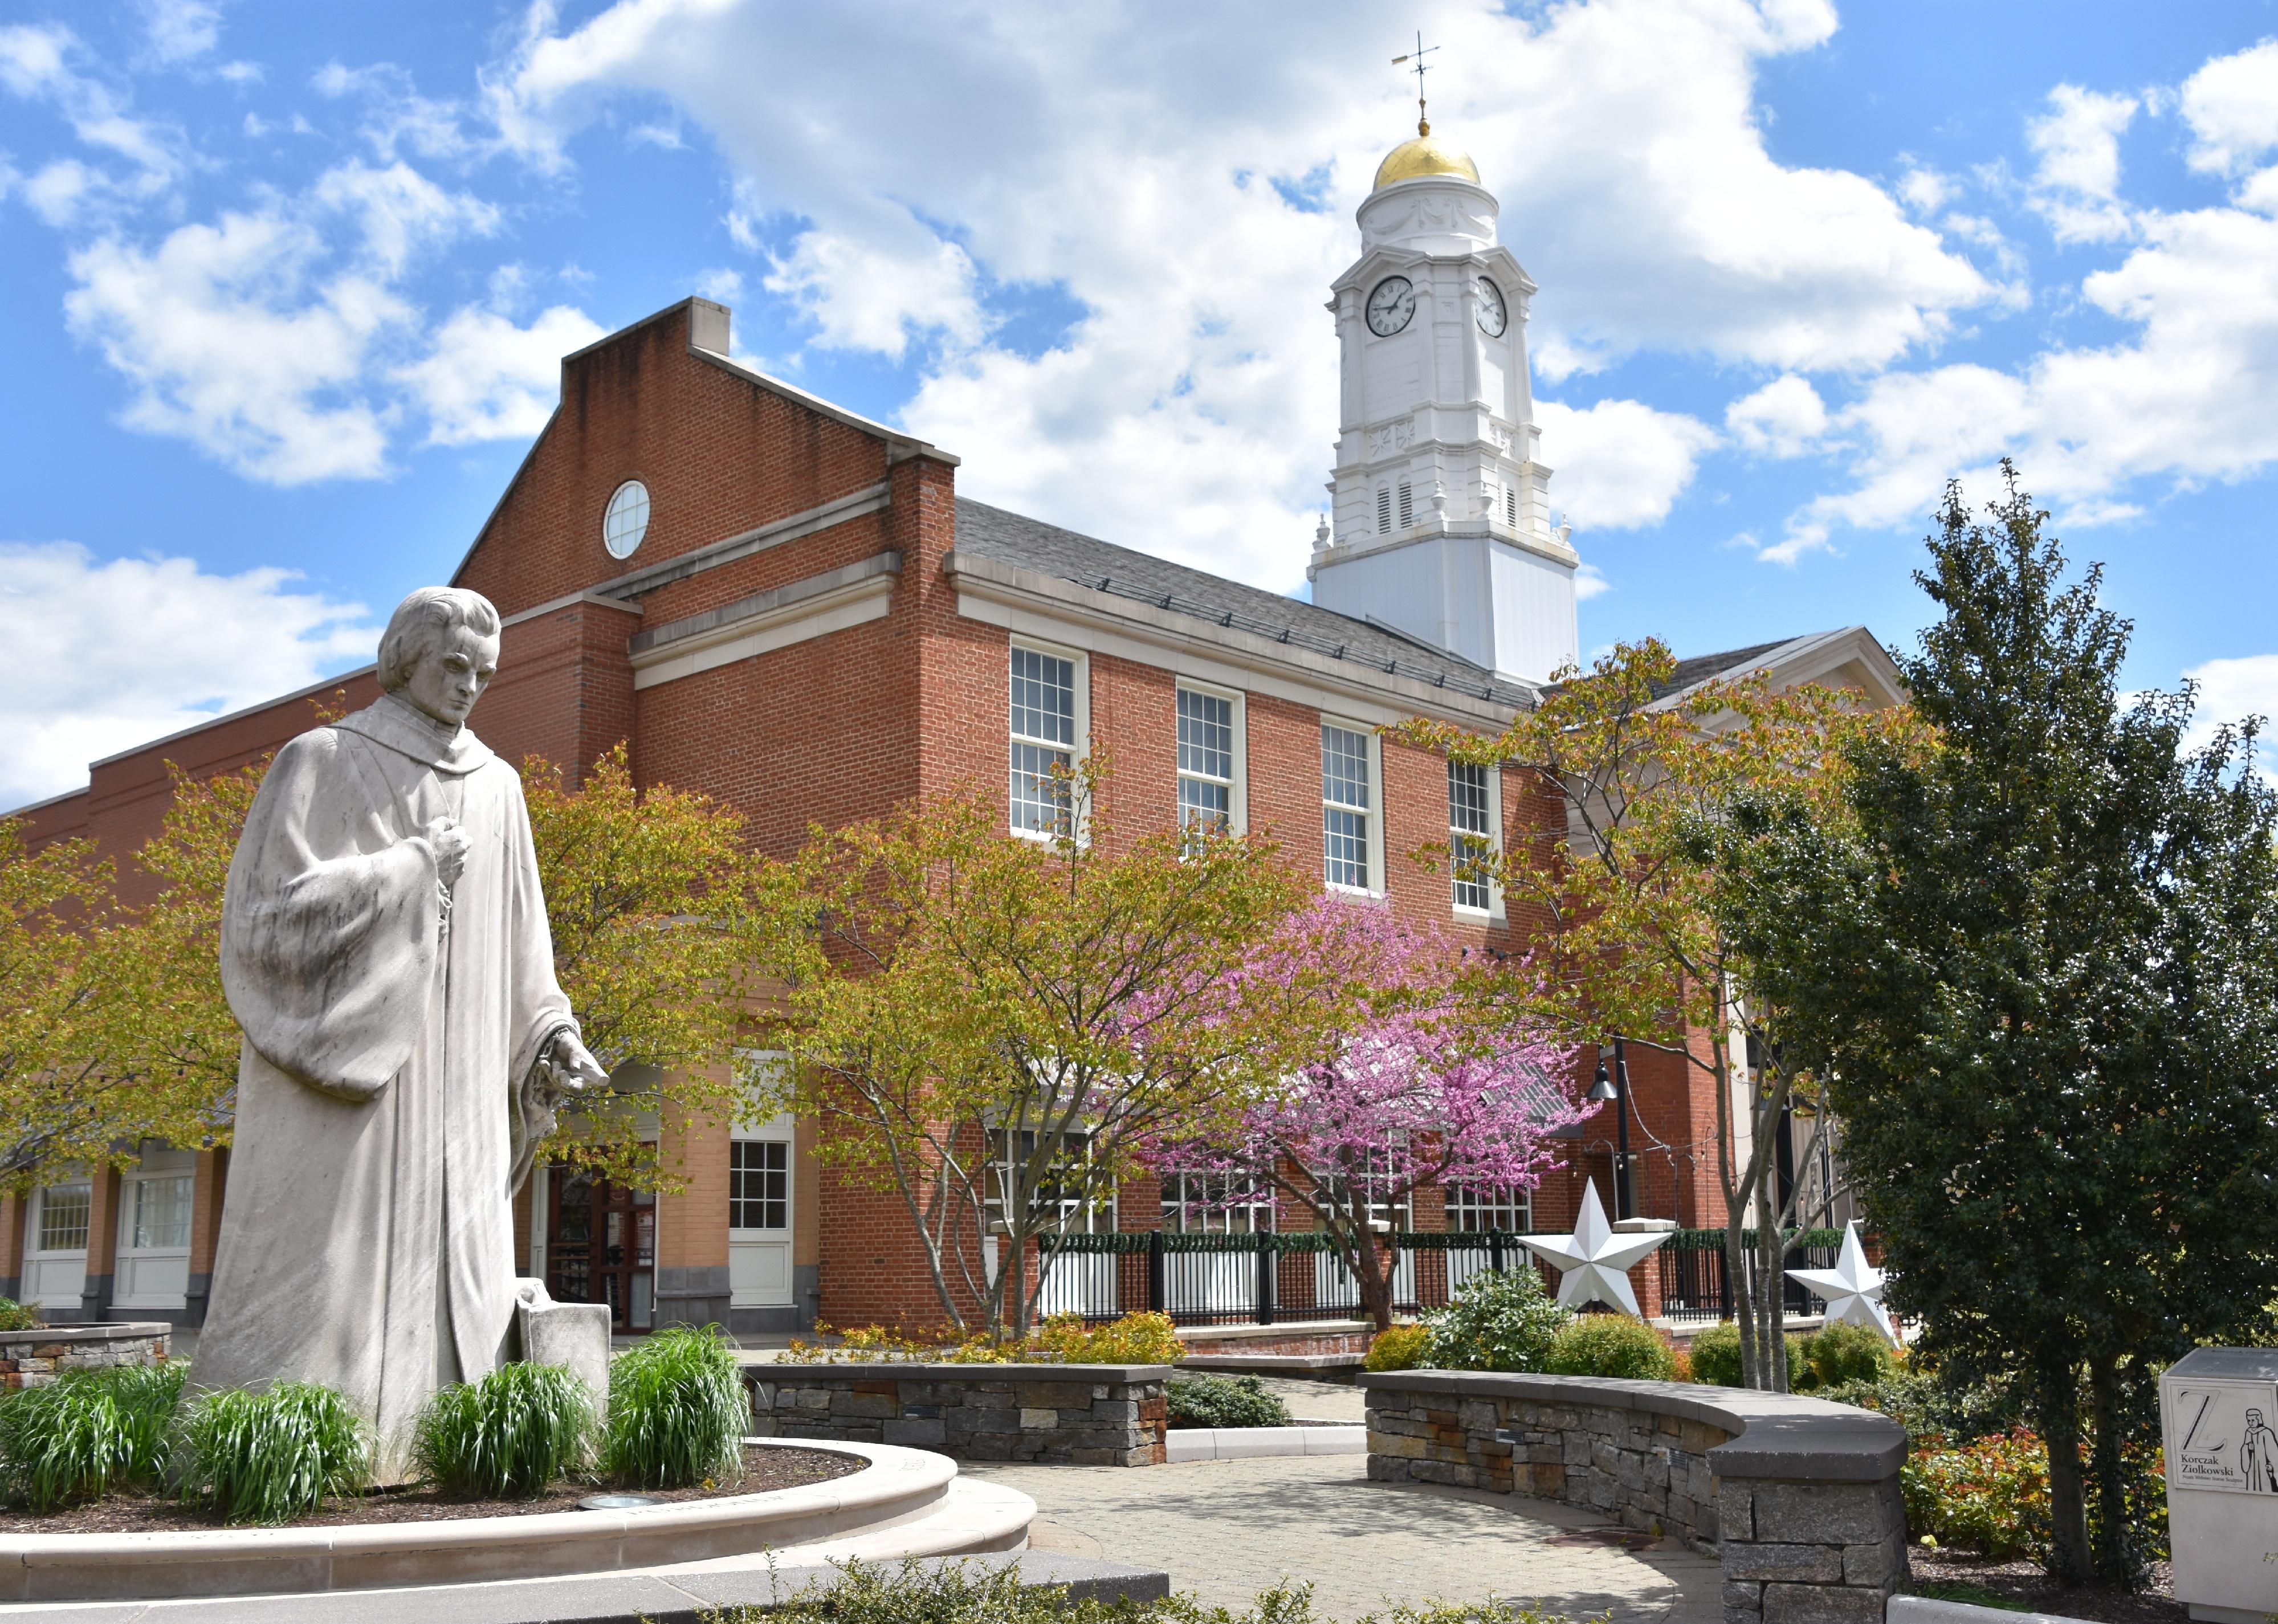 Noah Webster statue in West Hartford, Connecticut.